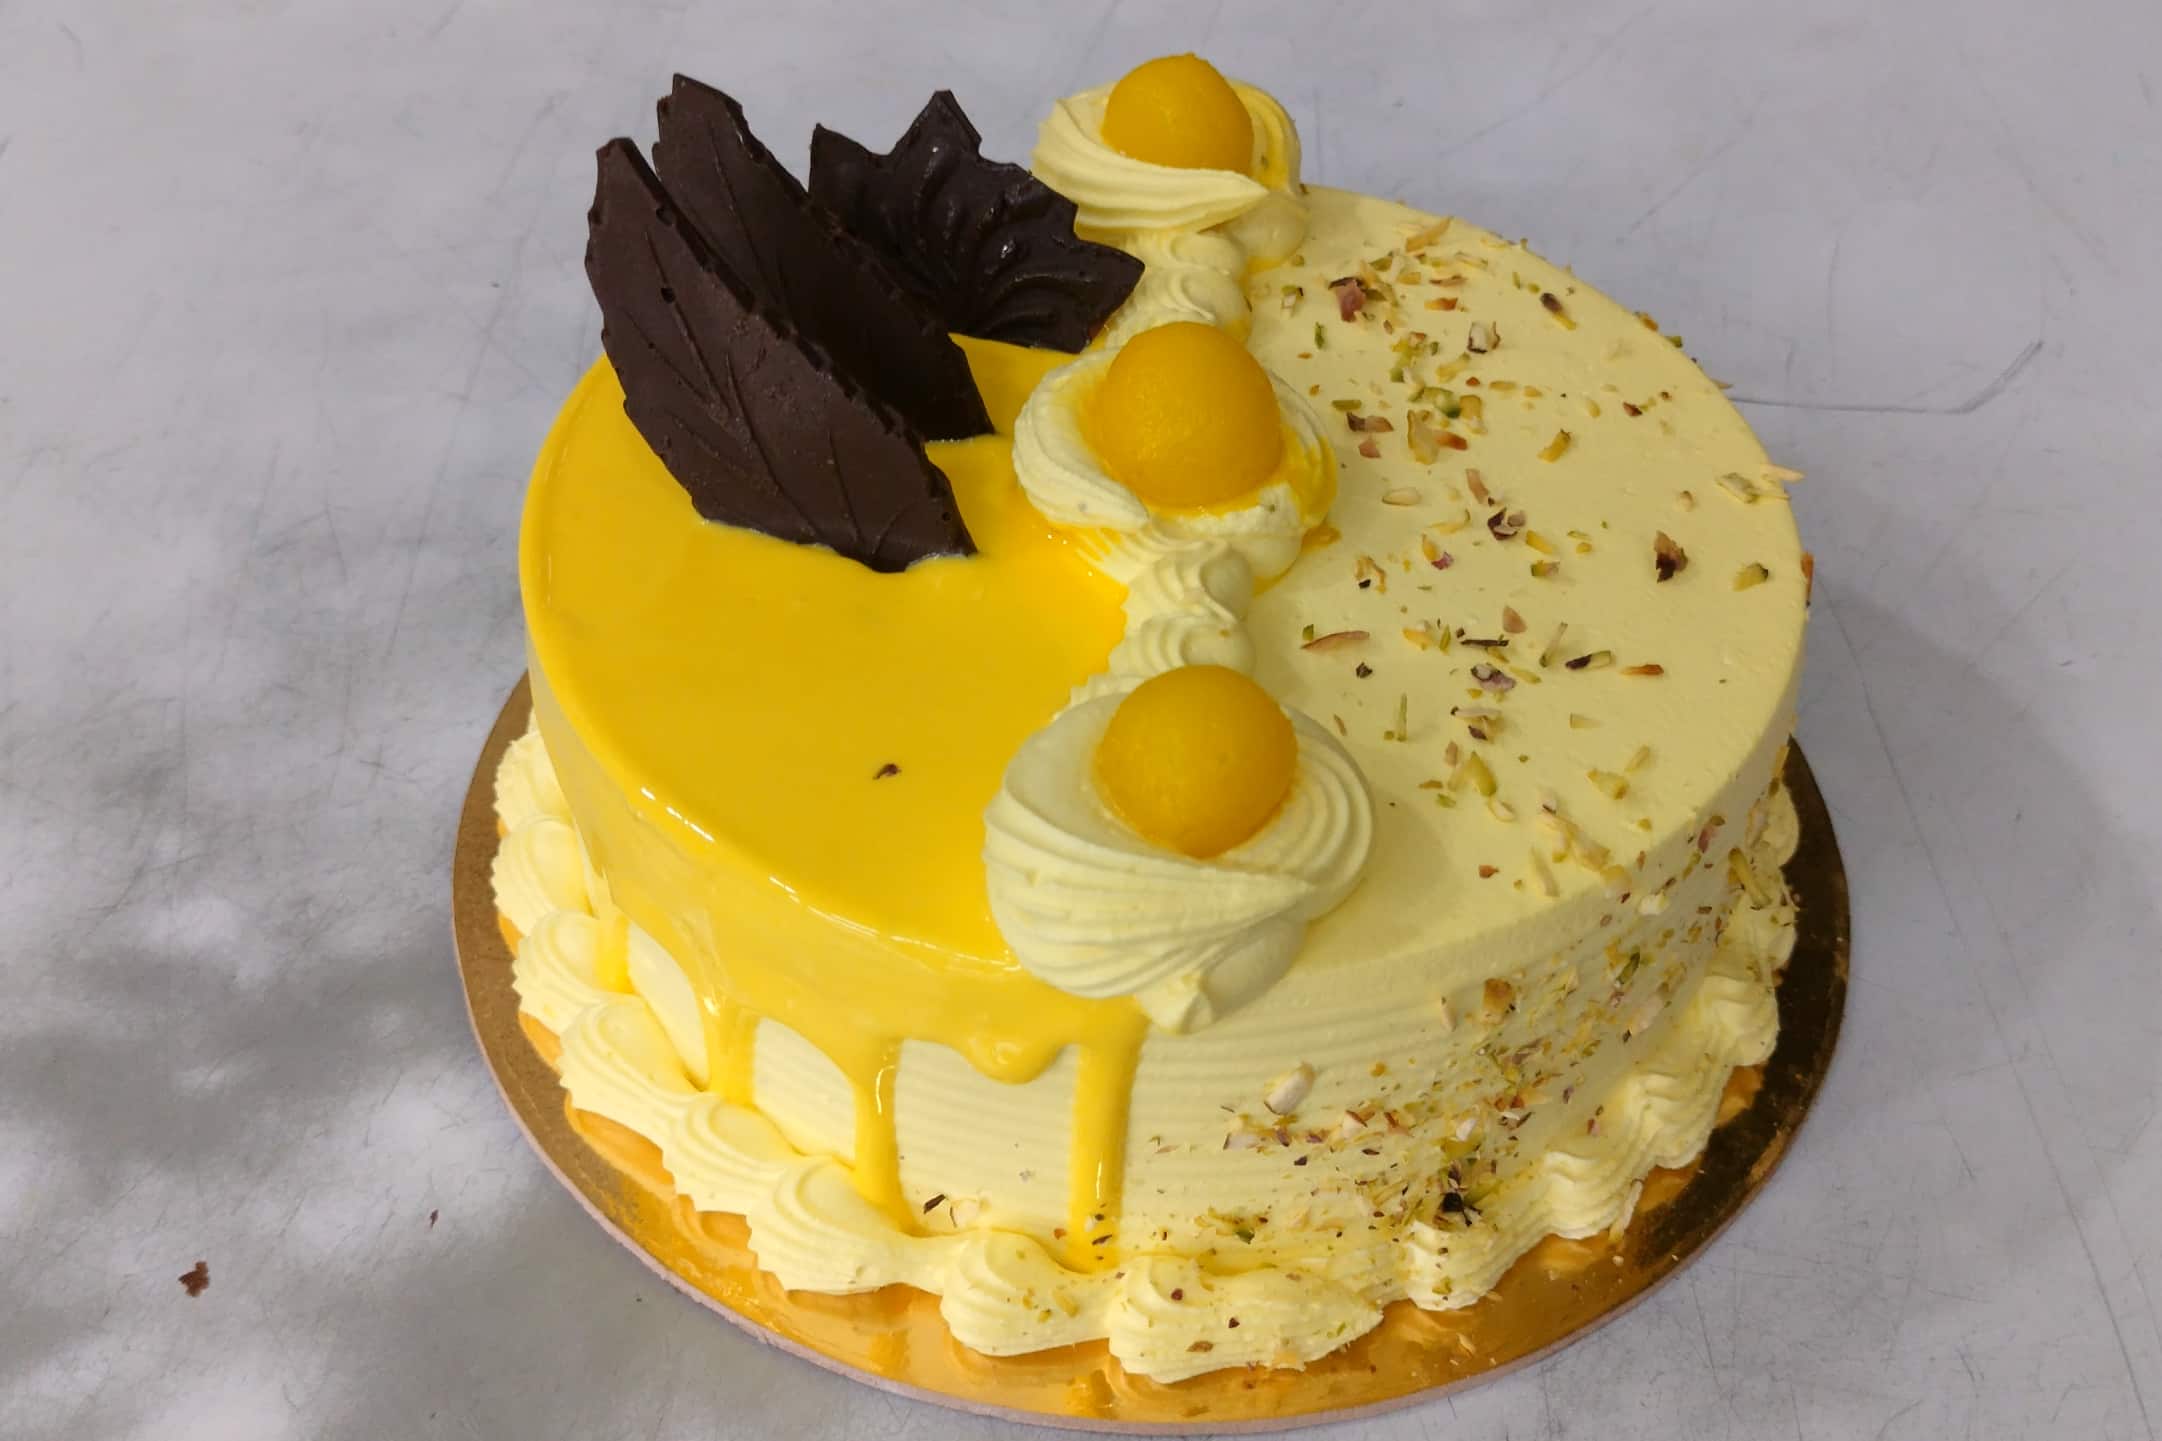 Kelas oven - Birthday cake for a special gee #buttercream #whitecake  #kelasoven #kela #shedibalabalachallenge #challengeaccepted  #cakeforboyfriend #cakeforbestfriend #CakeInLagos #lagosparty  #lagoshustlersgang #hustlesqure #cakesinegbeda #cakesinlasu ...